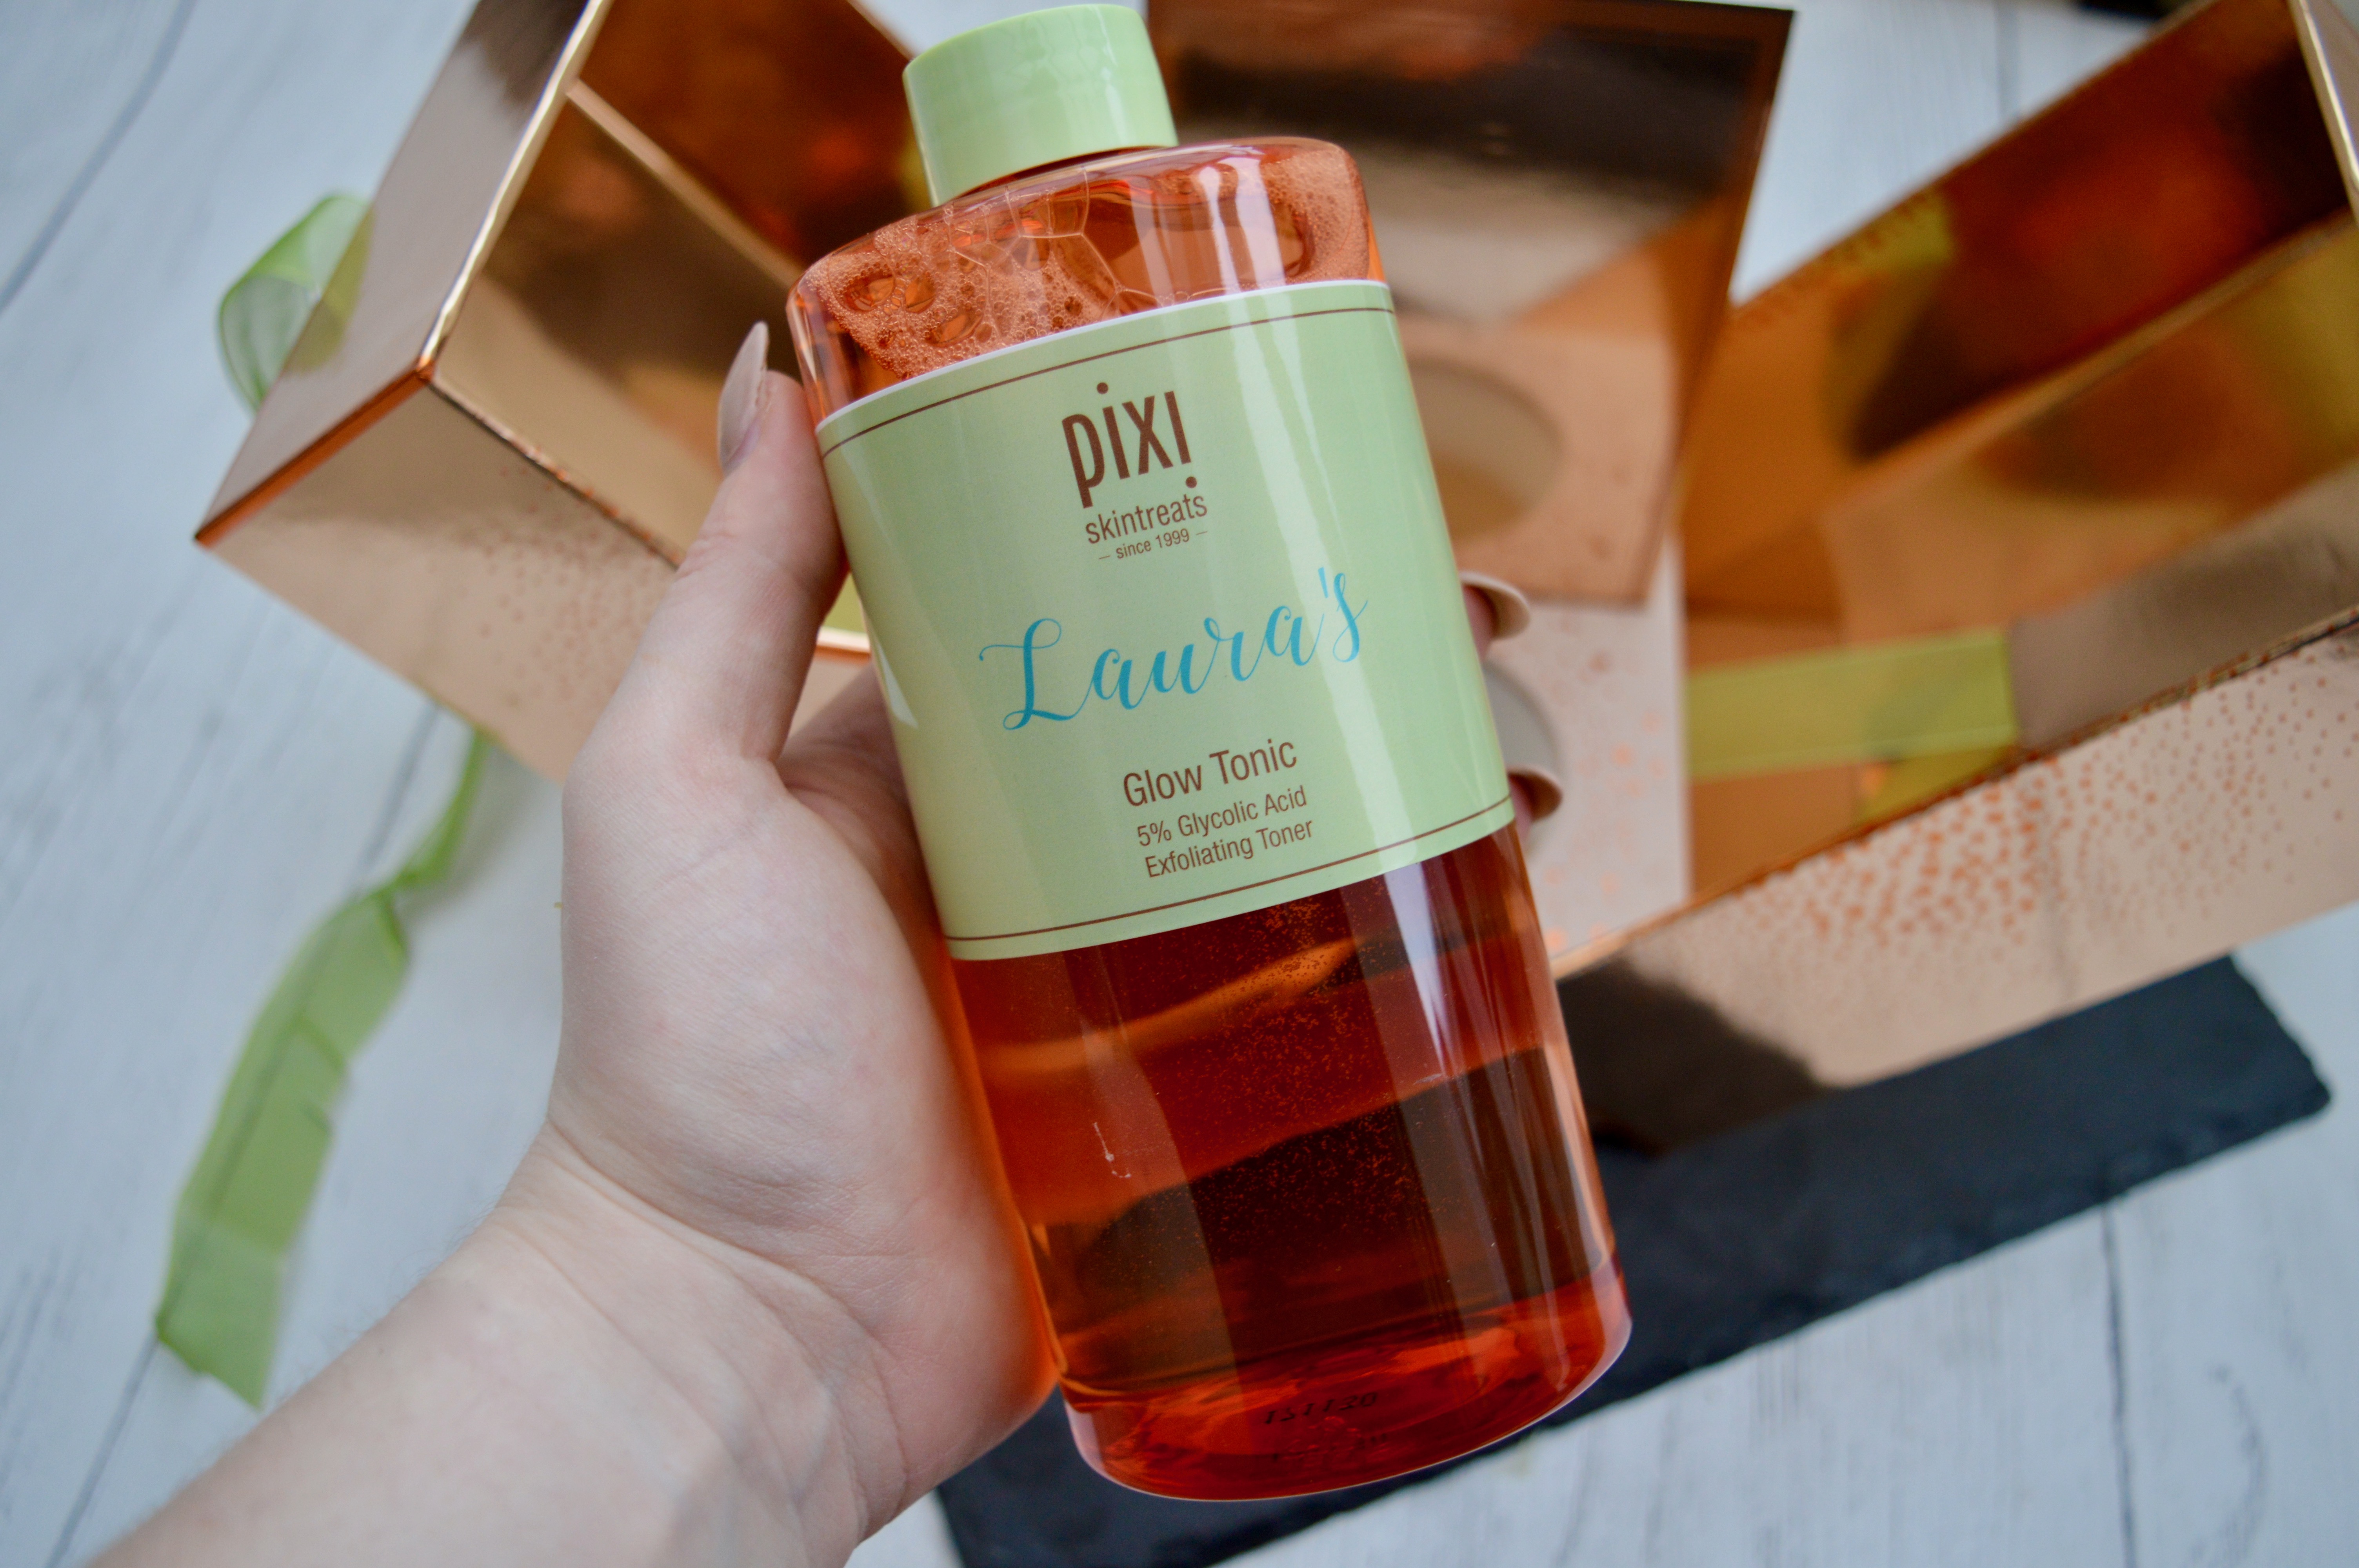 Pixi Glow Tonic Personalised Review Skin Care Regime | Elle Blonde Luxury Lifestyle Destination Blog